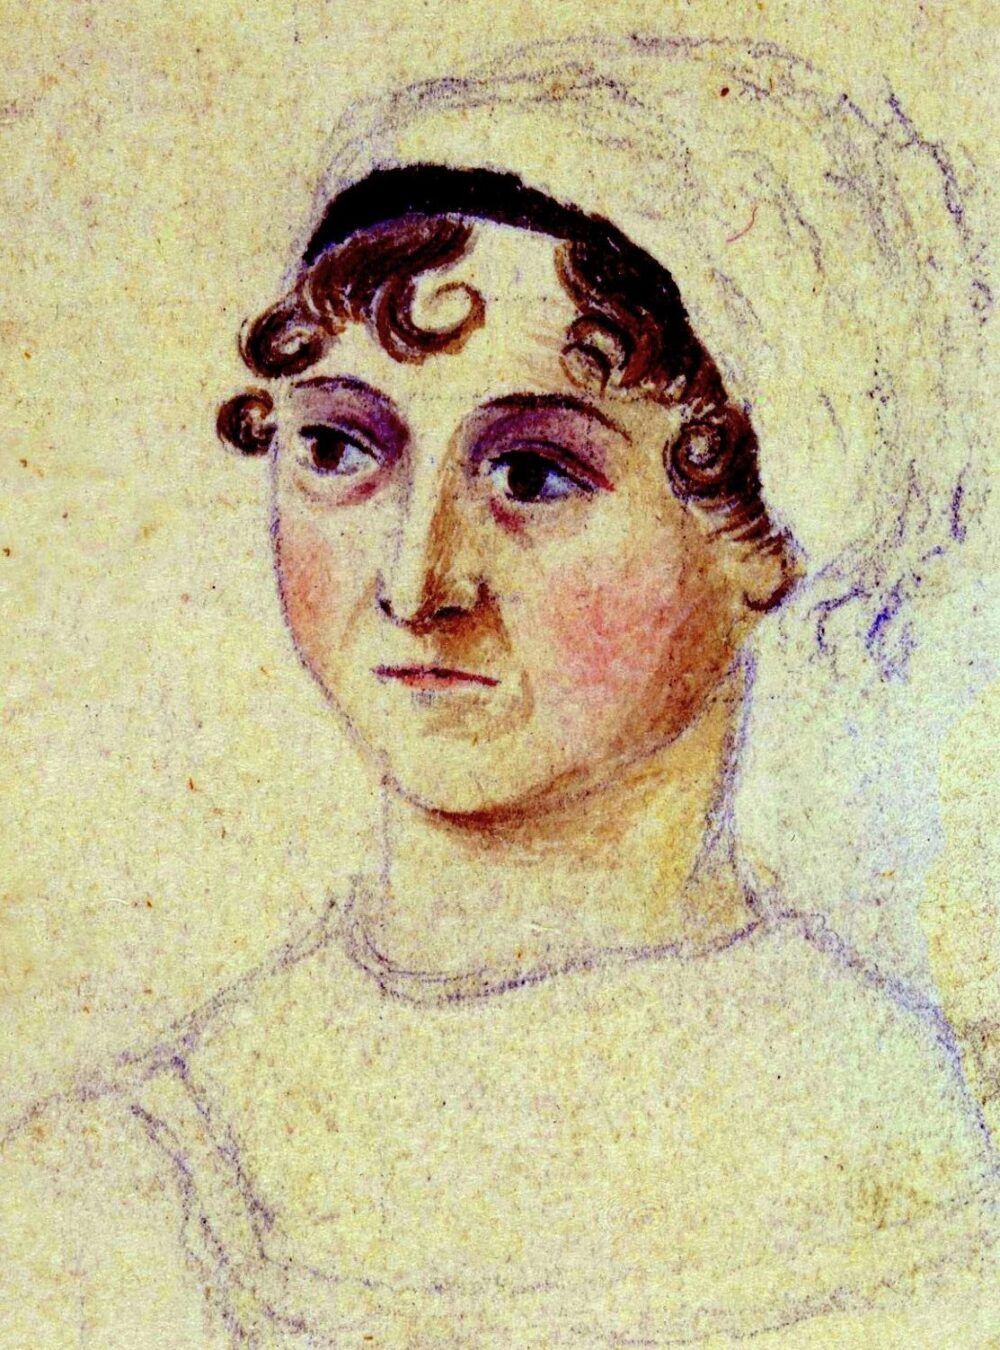 Image of the portrait of Jane Austen by Cassandra